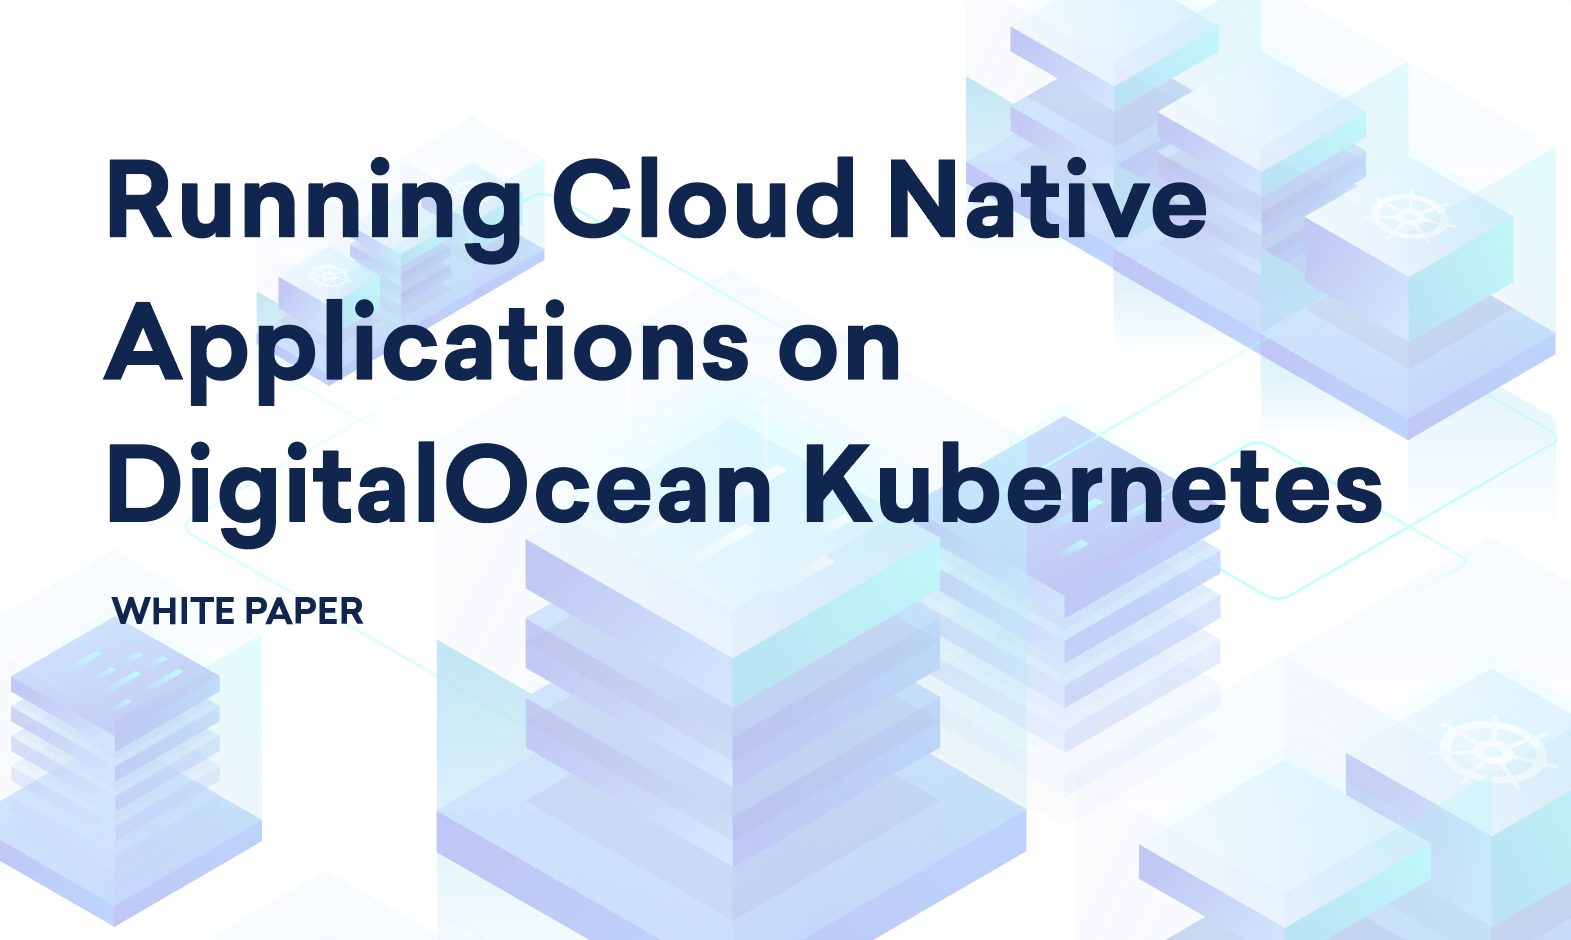 White Paper: Running Cloud Native Applications on DigitalOcean Kubernetes